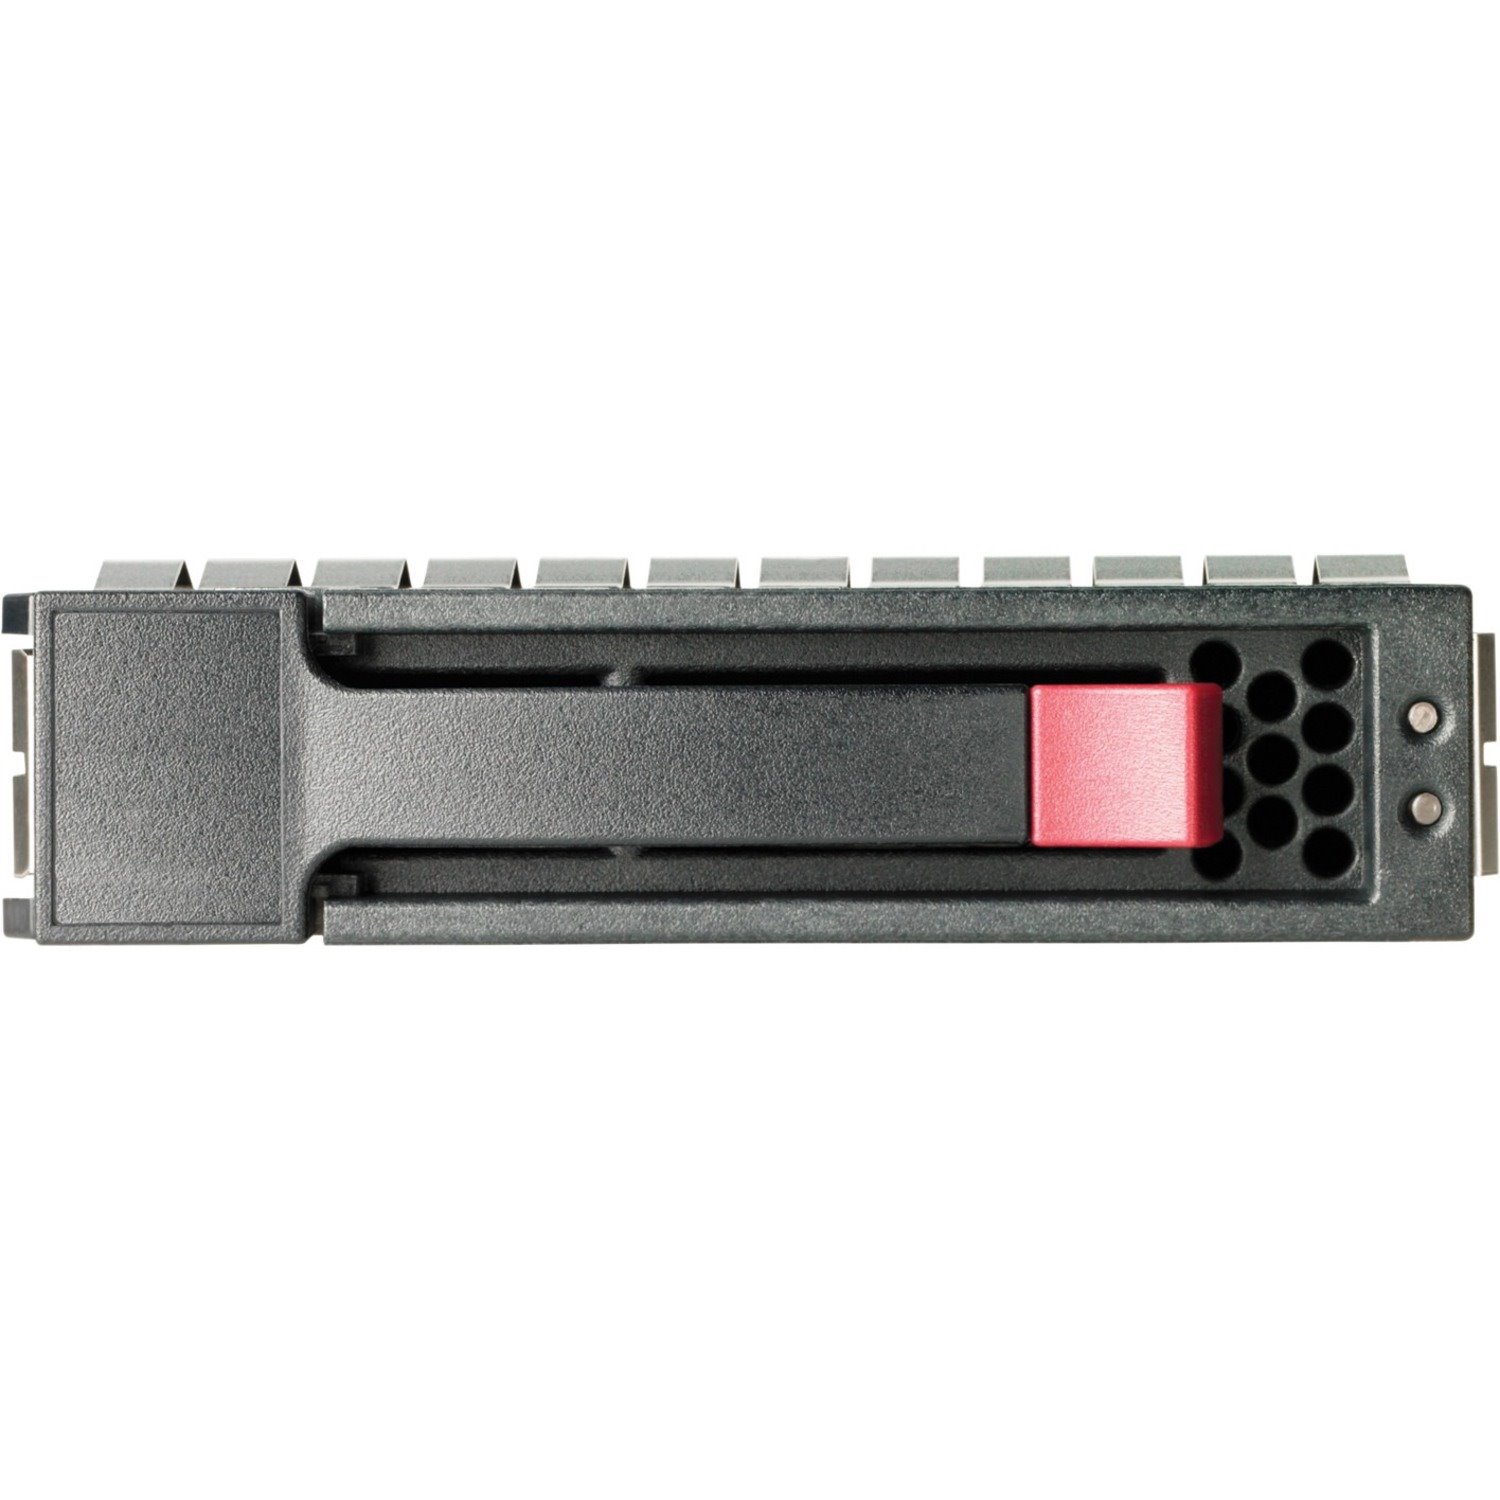 HPE 16 TB Hard Drive - 3.5" Internal - SAS (12Gb/s SAS)